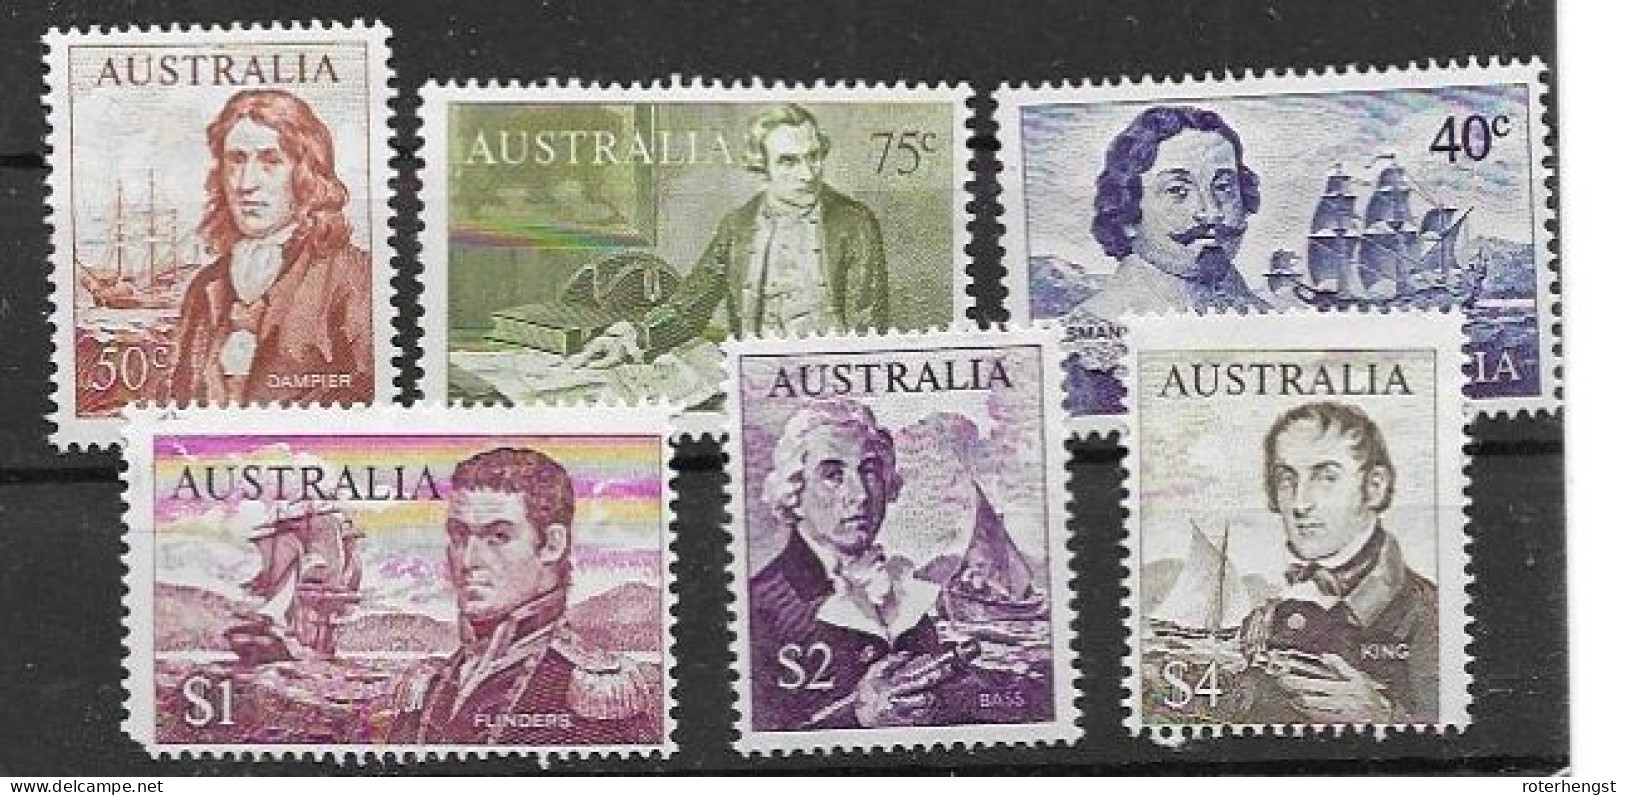 Australia Explorers Complete Set Mh * (45 Euros) But 1$ Is Faulty (missing Corner Perf) 1966 - Nuevos